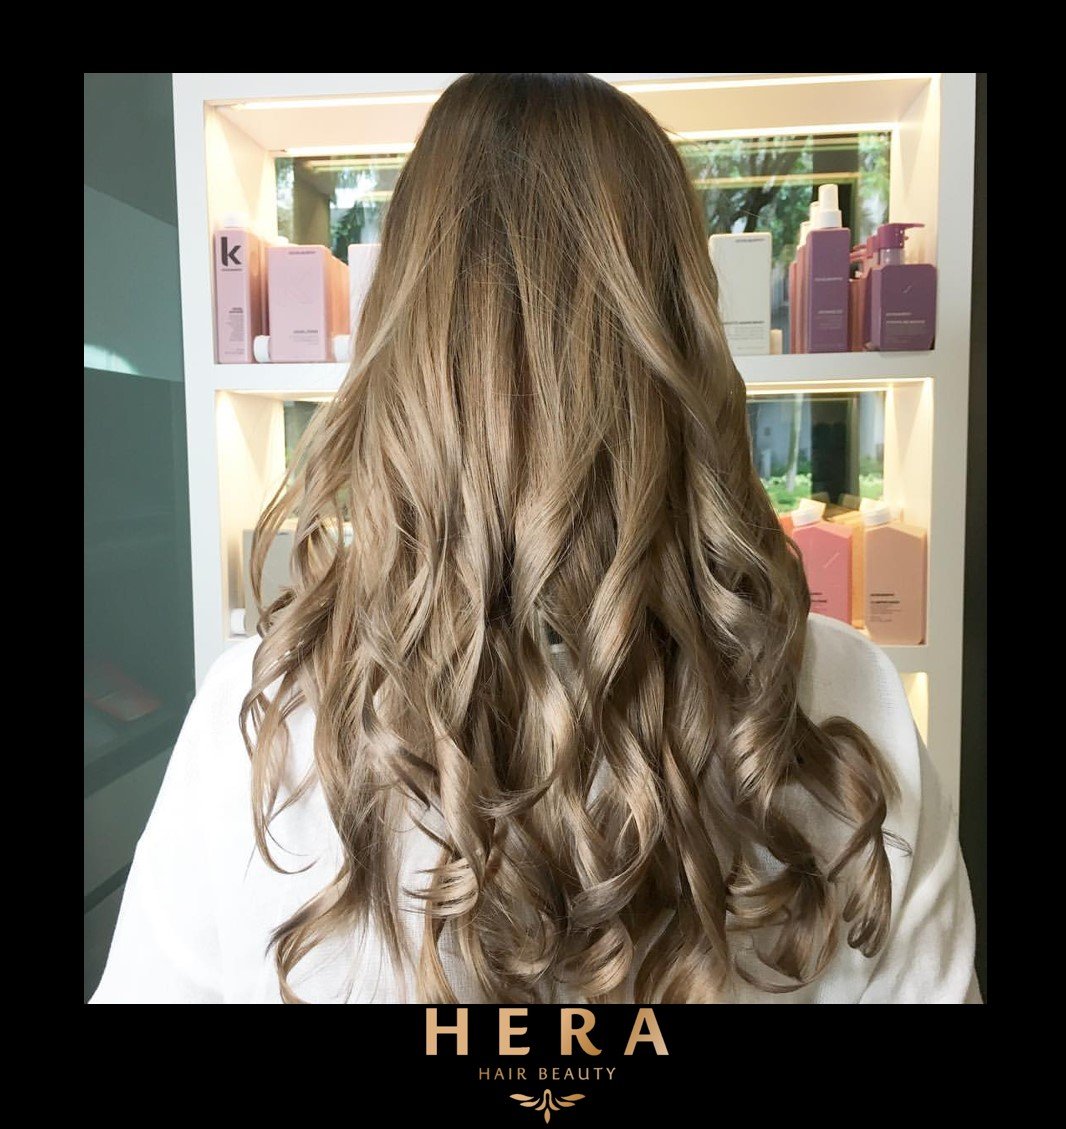 LONG CURLY HAIR CARE Tips and Advice | Hera Hair Beauty